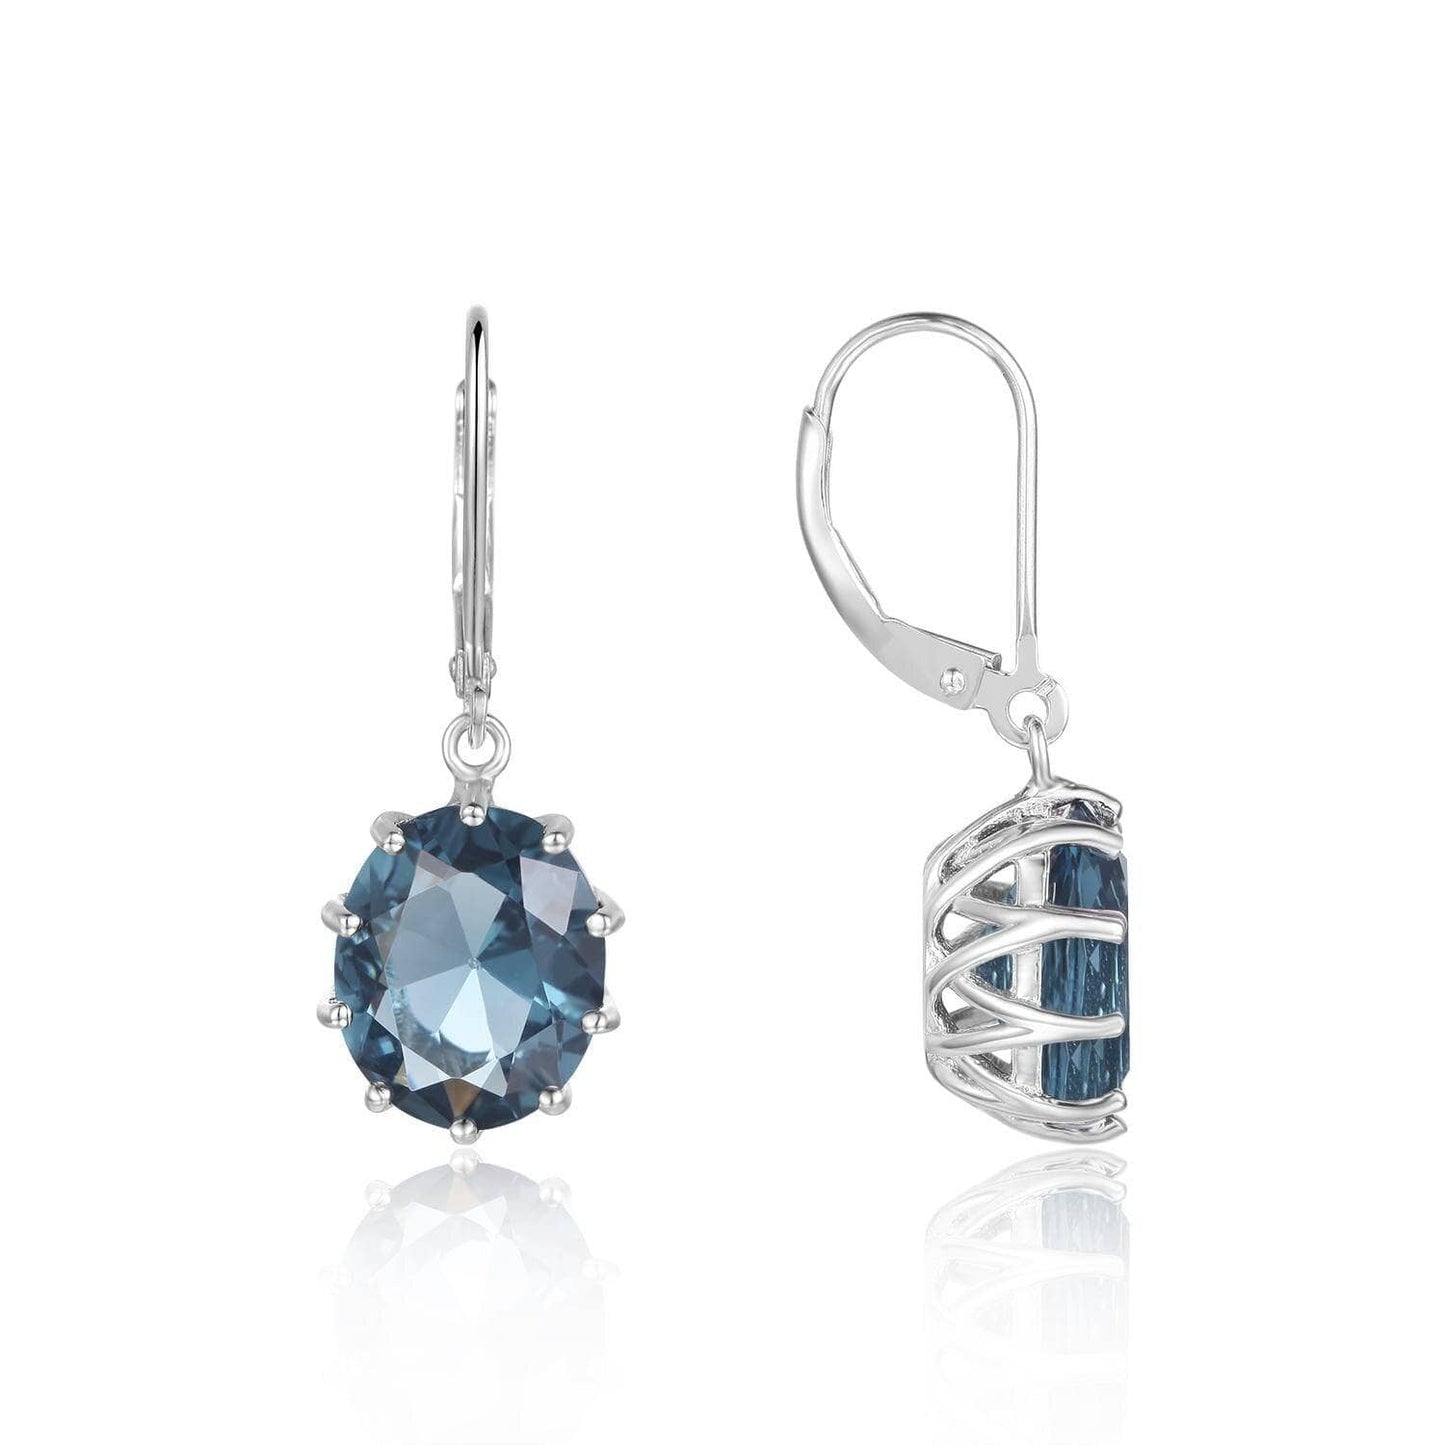 Lab Created Gemstone Lever Back Earrings-Black Diamonds New York